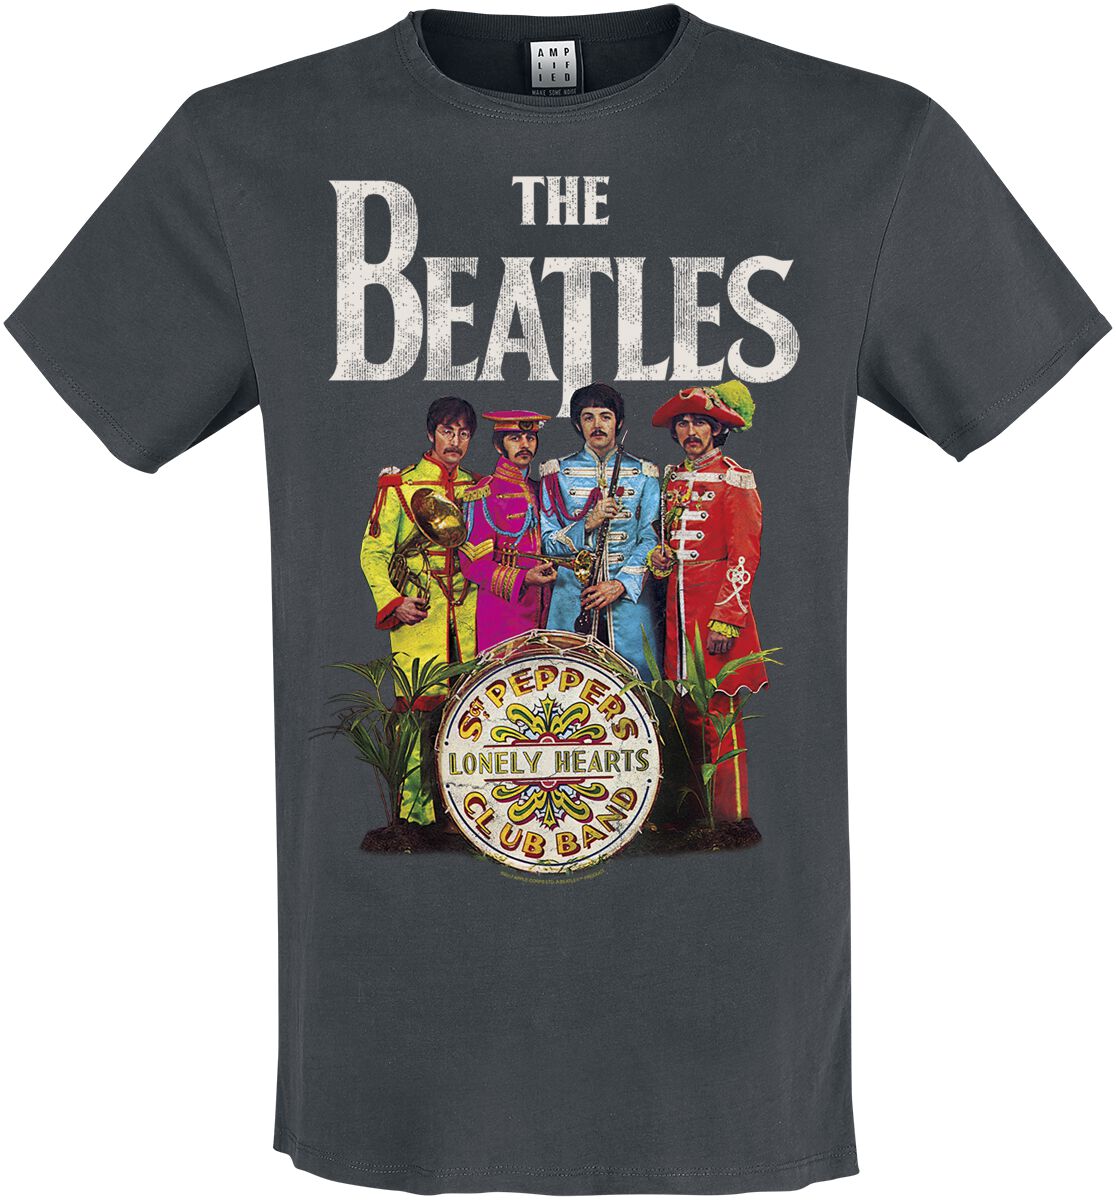 The Beatles T-Shirt - Amplified Collection - Lonely Hearts - M bis XXL - für Männer - Größe L - charcoal  - Lizenziertes Merchandise!